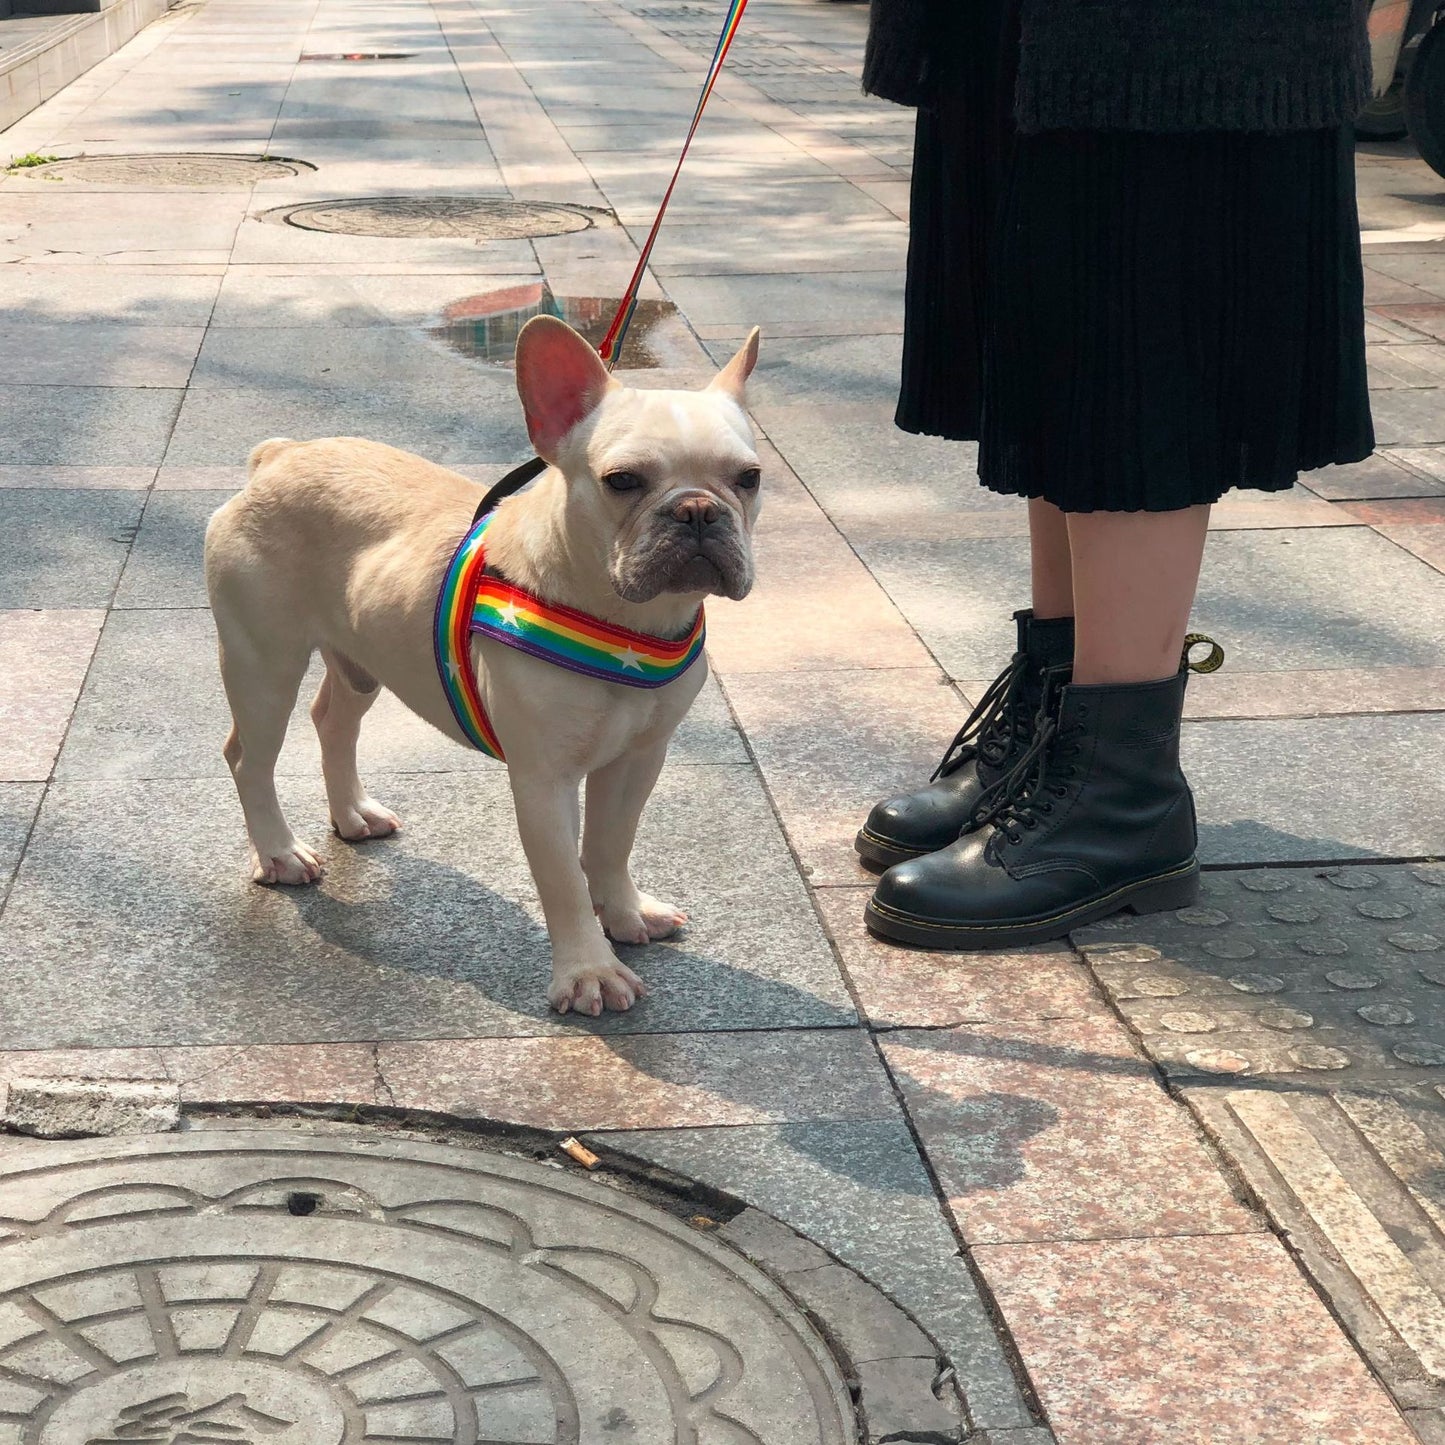 Rainbow cool dog chain dog leash